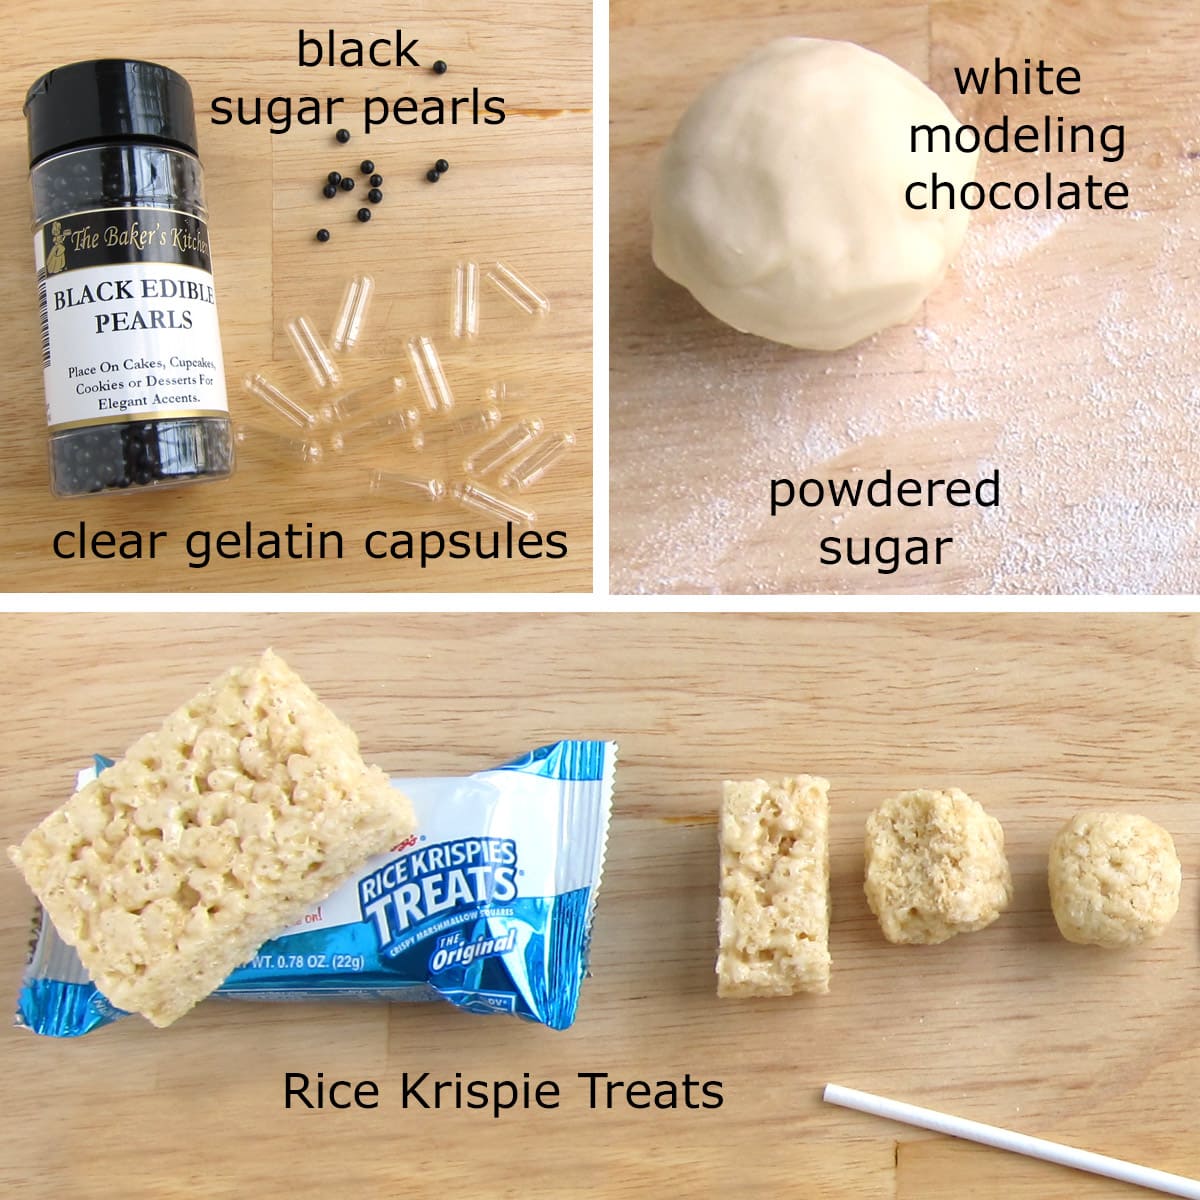 Rice Krispie Treat Ghost Lollipops ingredients including black sugar pearls, clear gelatin capsules, and white modeling chocolate. 